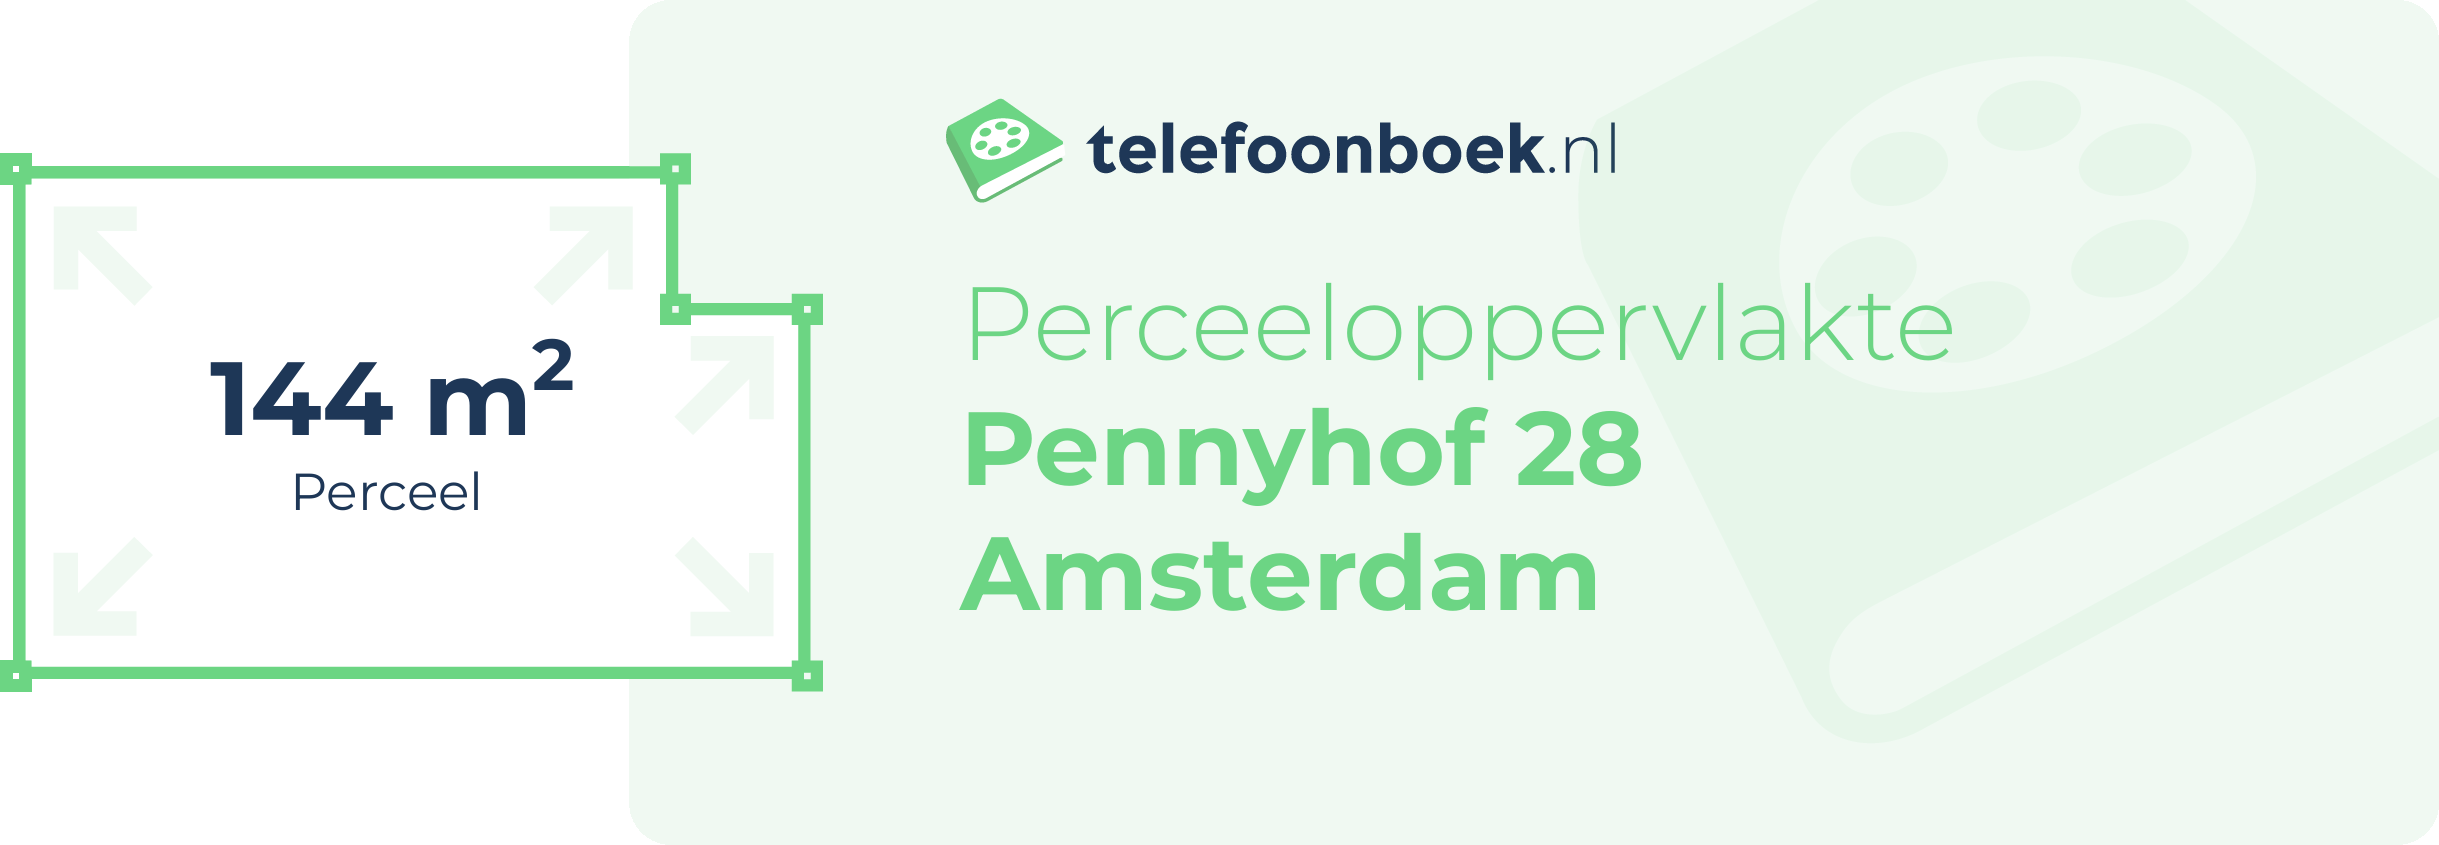 Perceeloppervlakte Pennyhof 28 Amsterdam